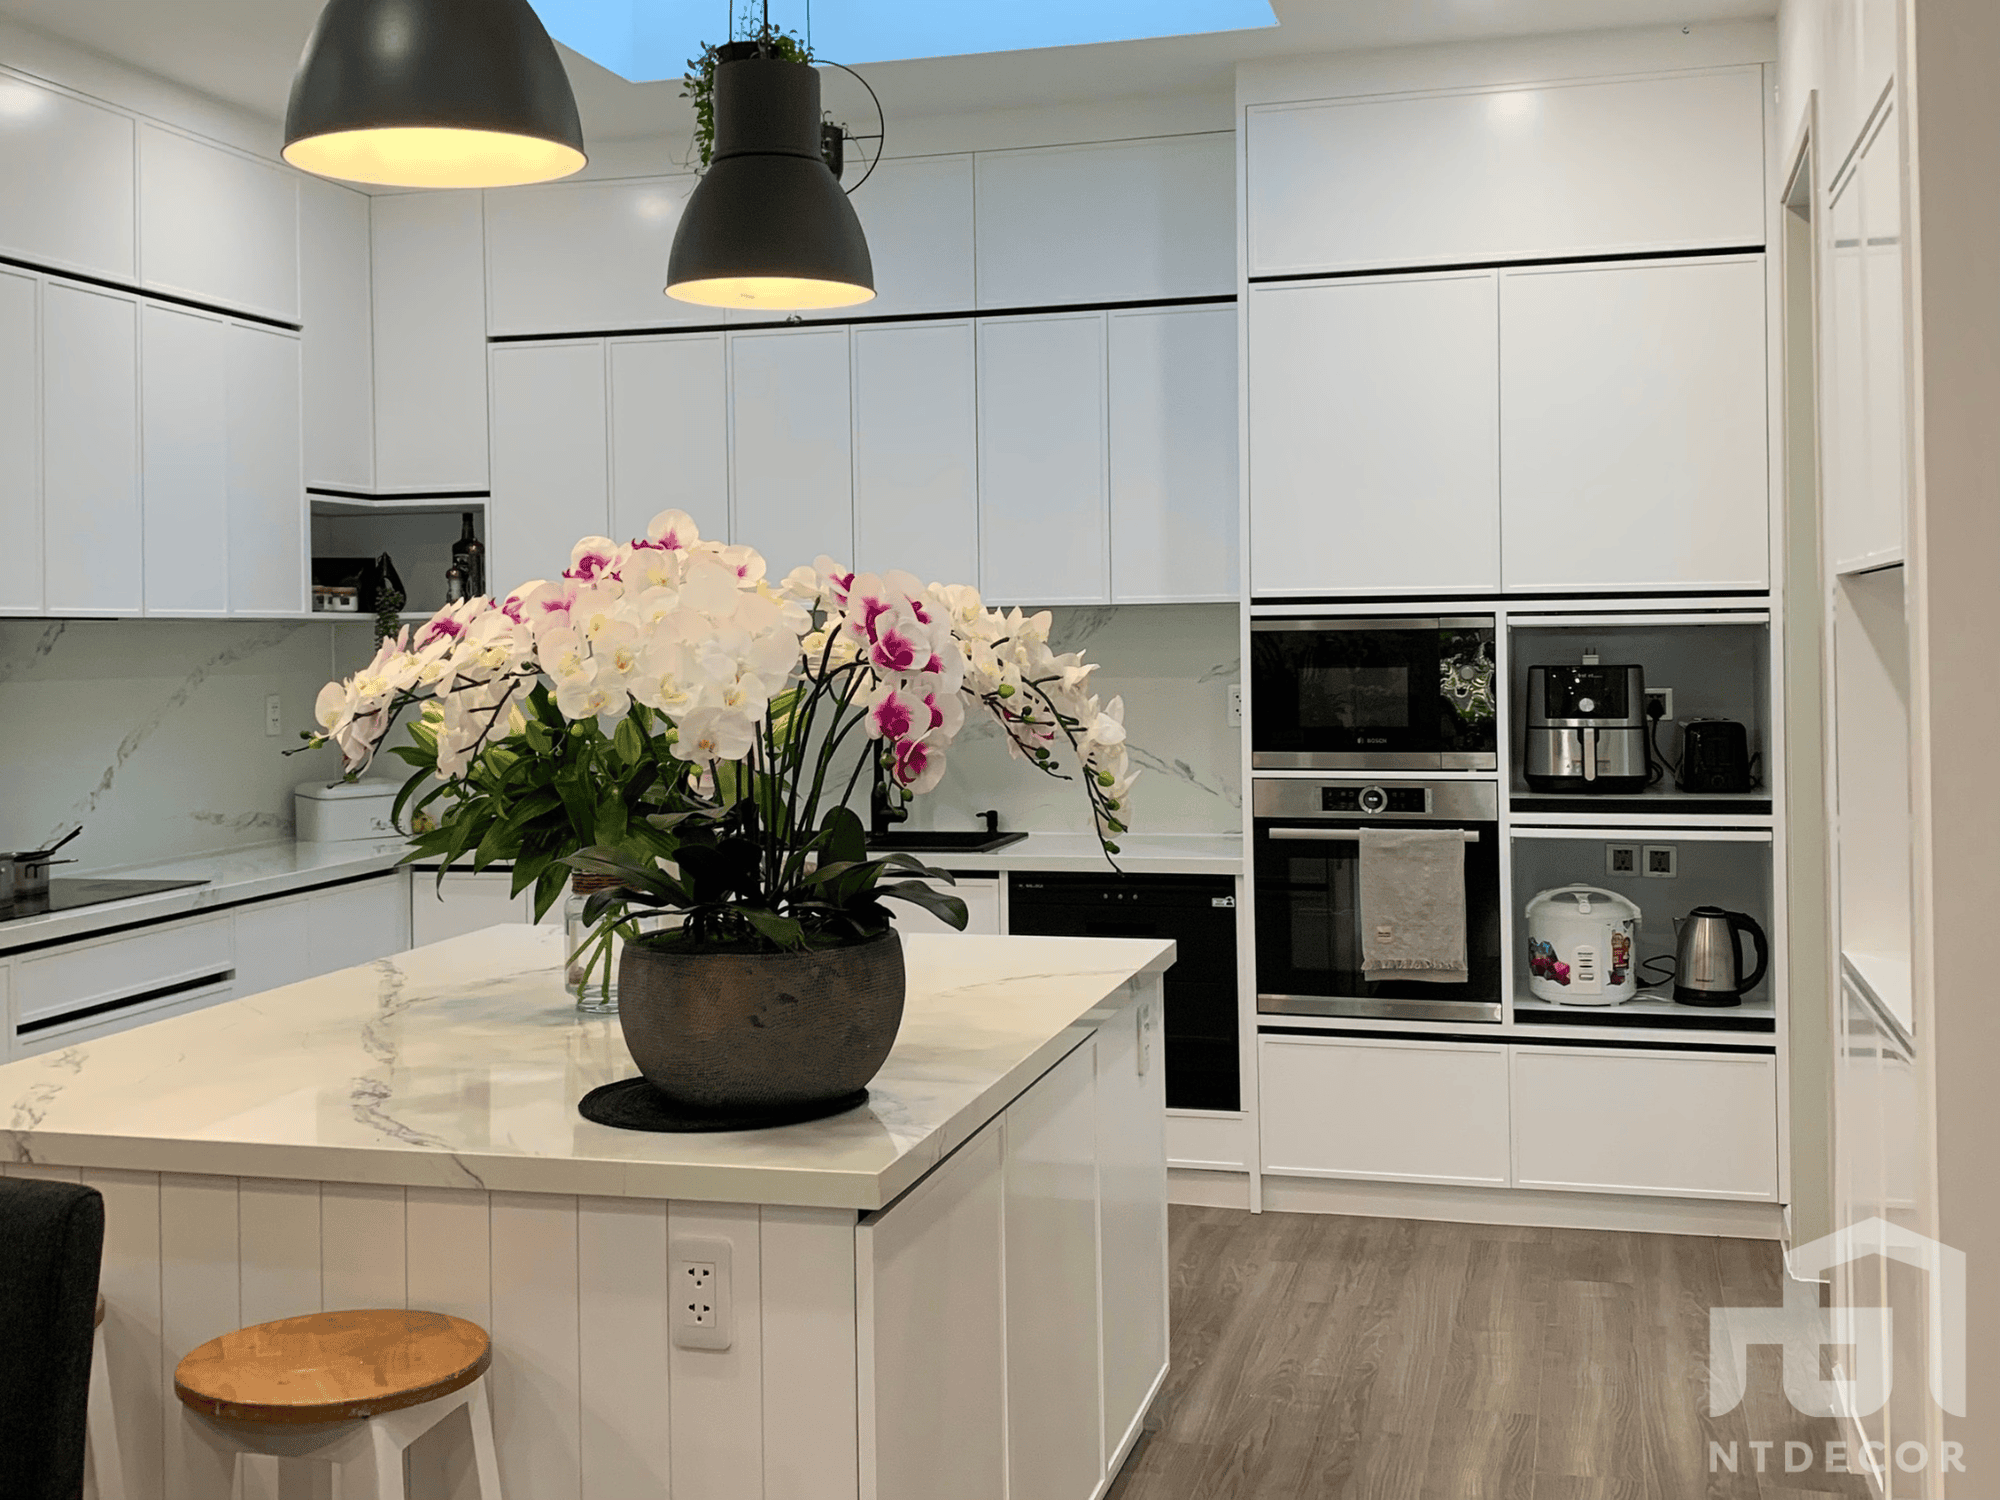 Kitchen Reality Design of Daniel's House Interior Design Modern Style | NTDecor